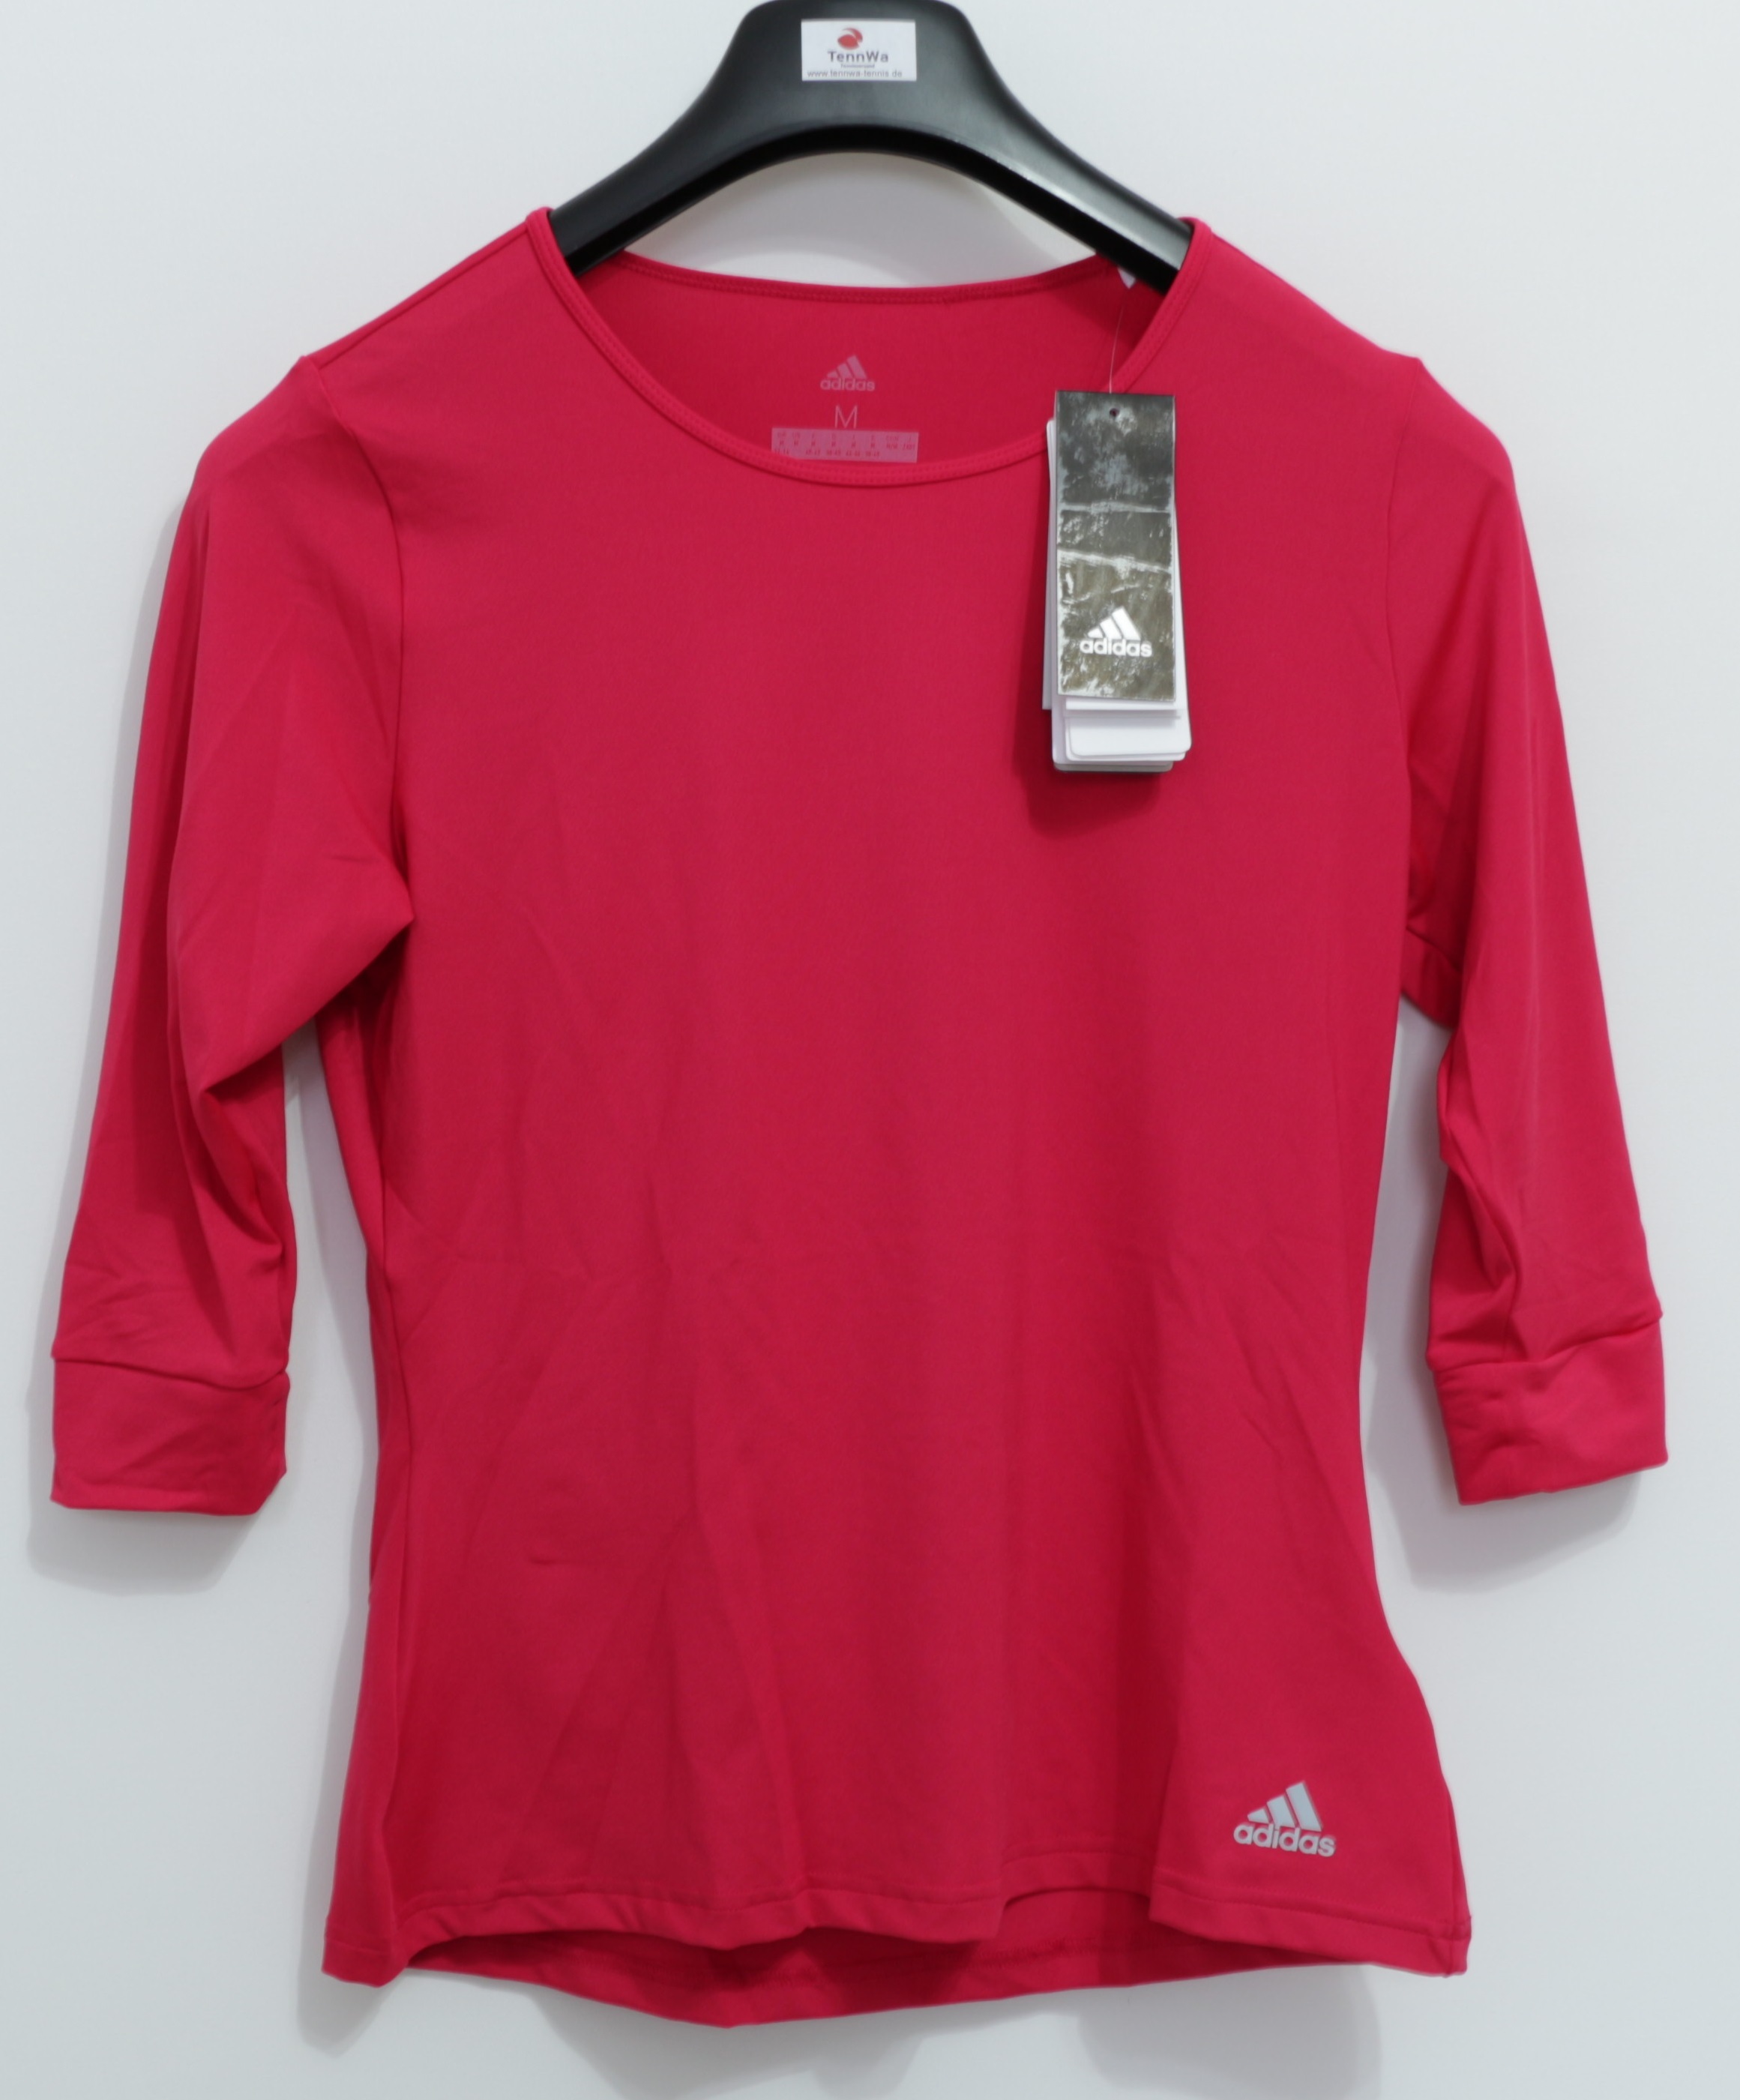 Adidas Advantage 3/4 Sleeve pink